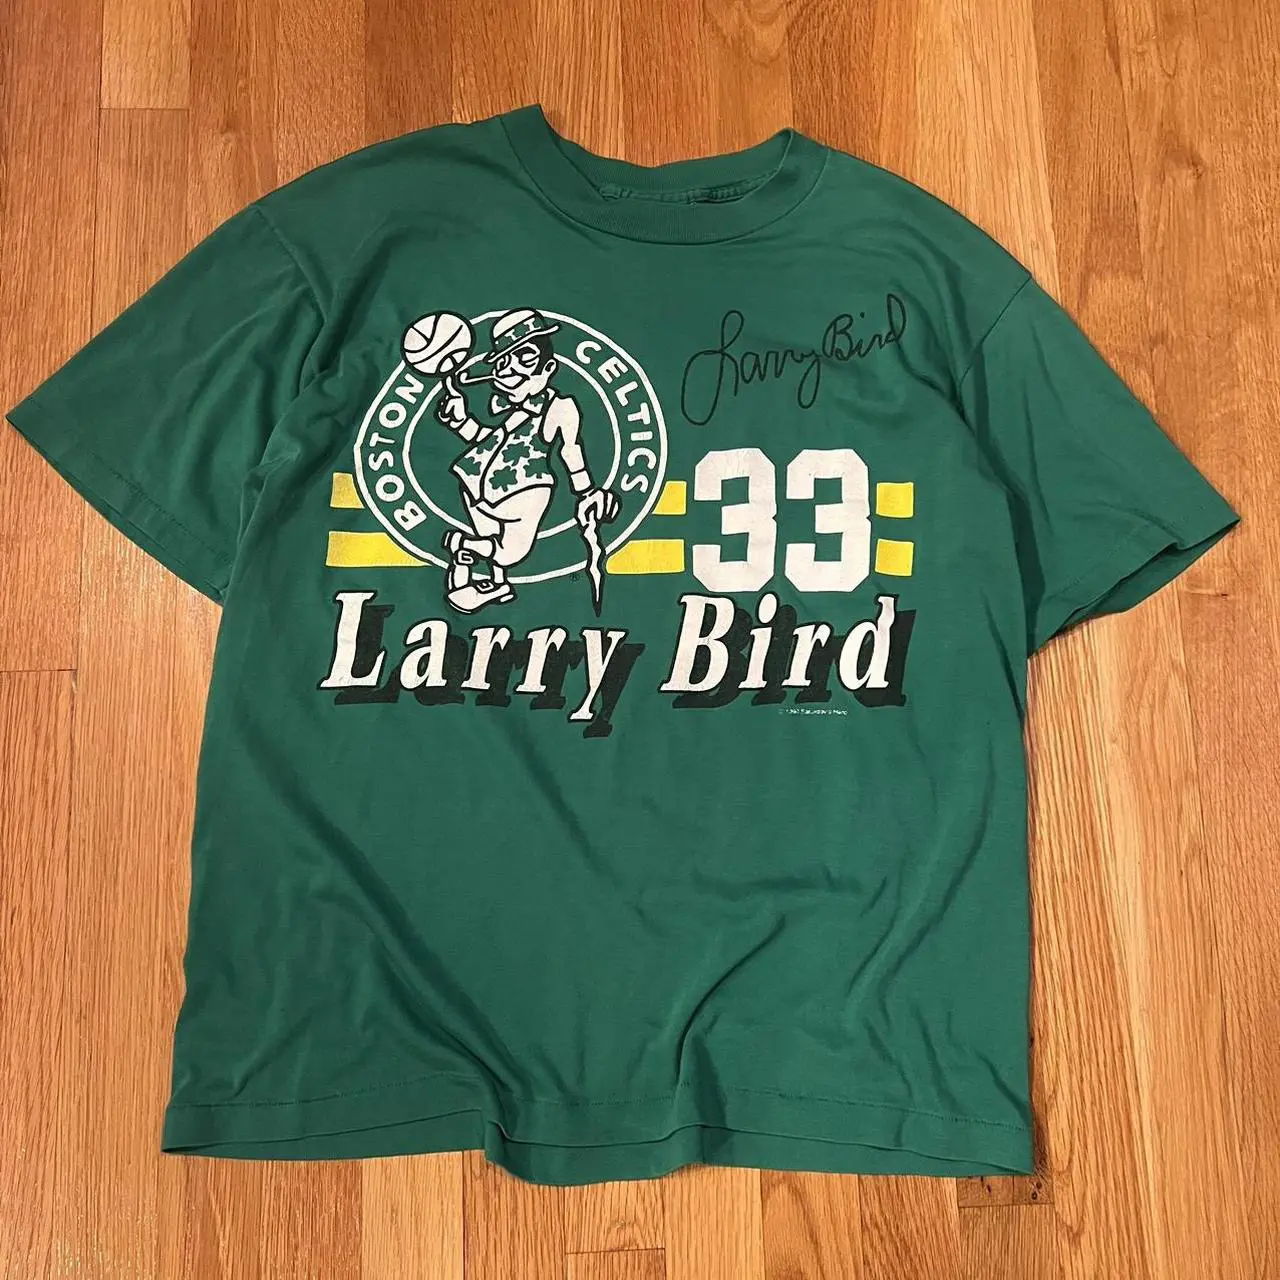 Vintage Celtics tshirt (L)